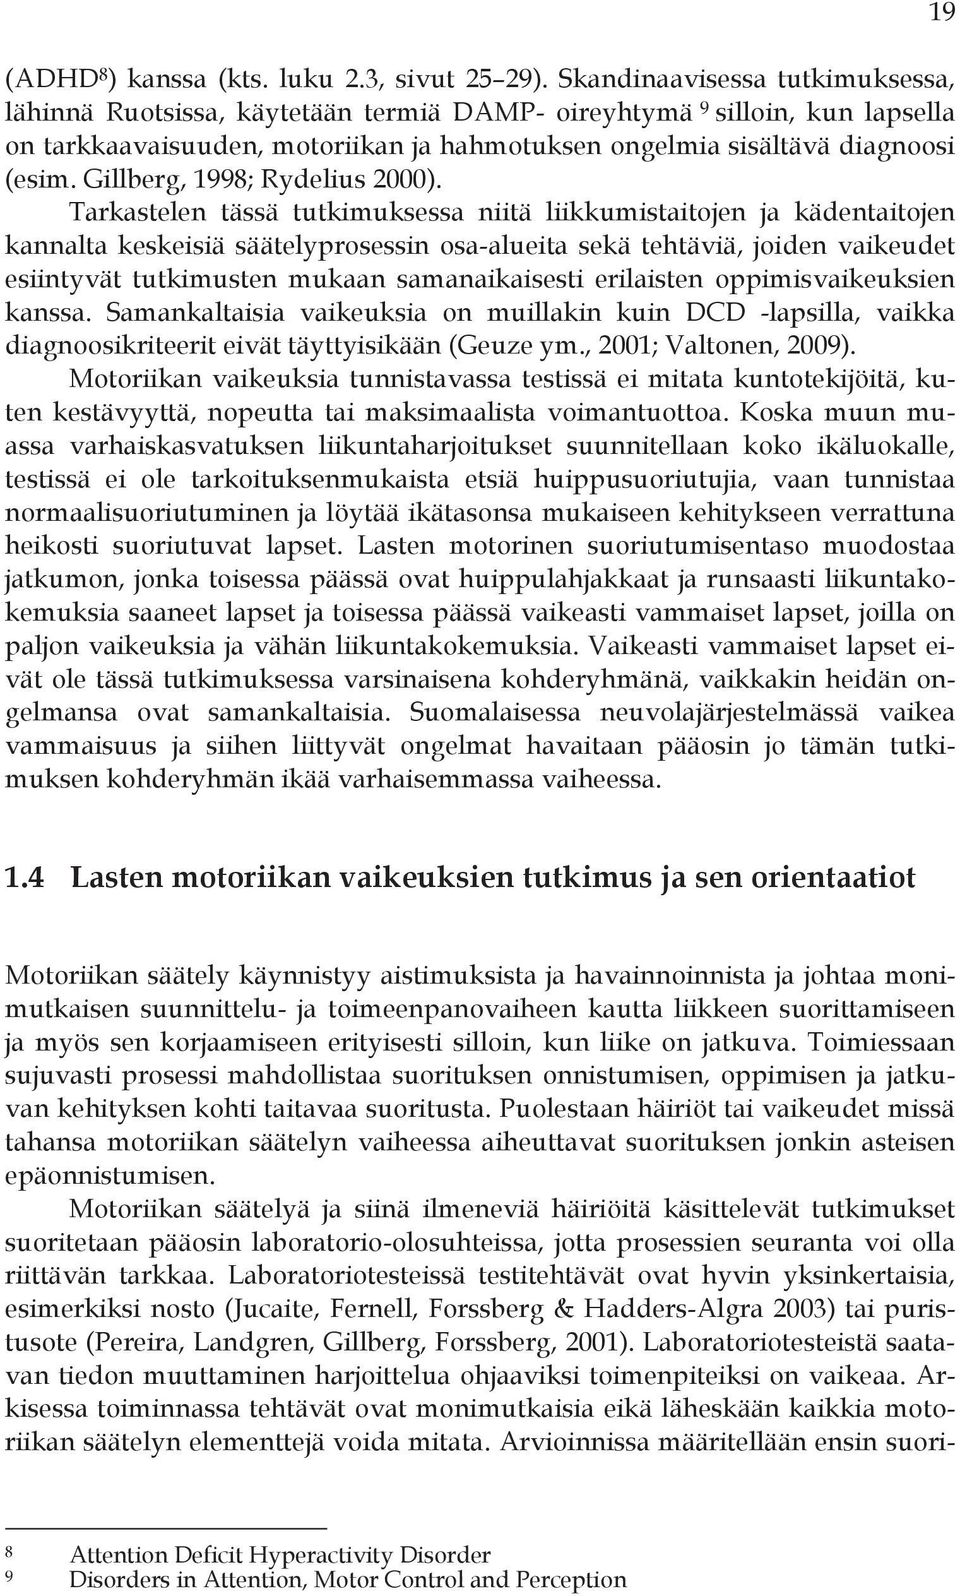 Gillberg, 1998; Rydelius 2000).